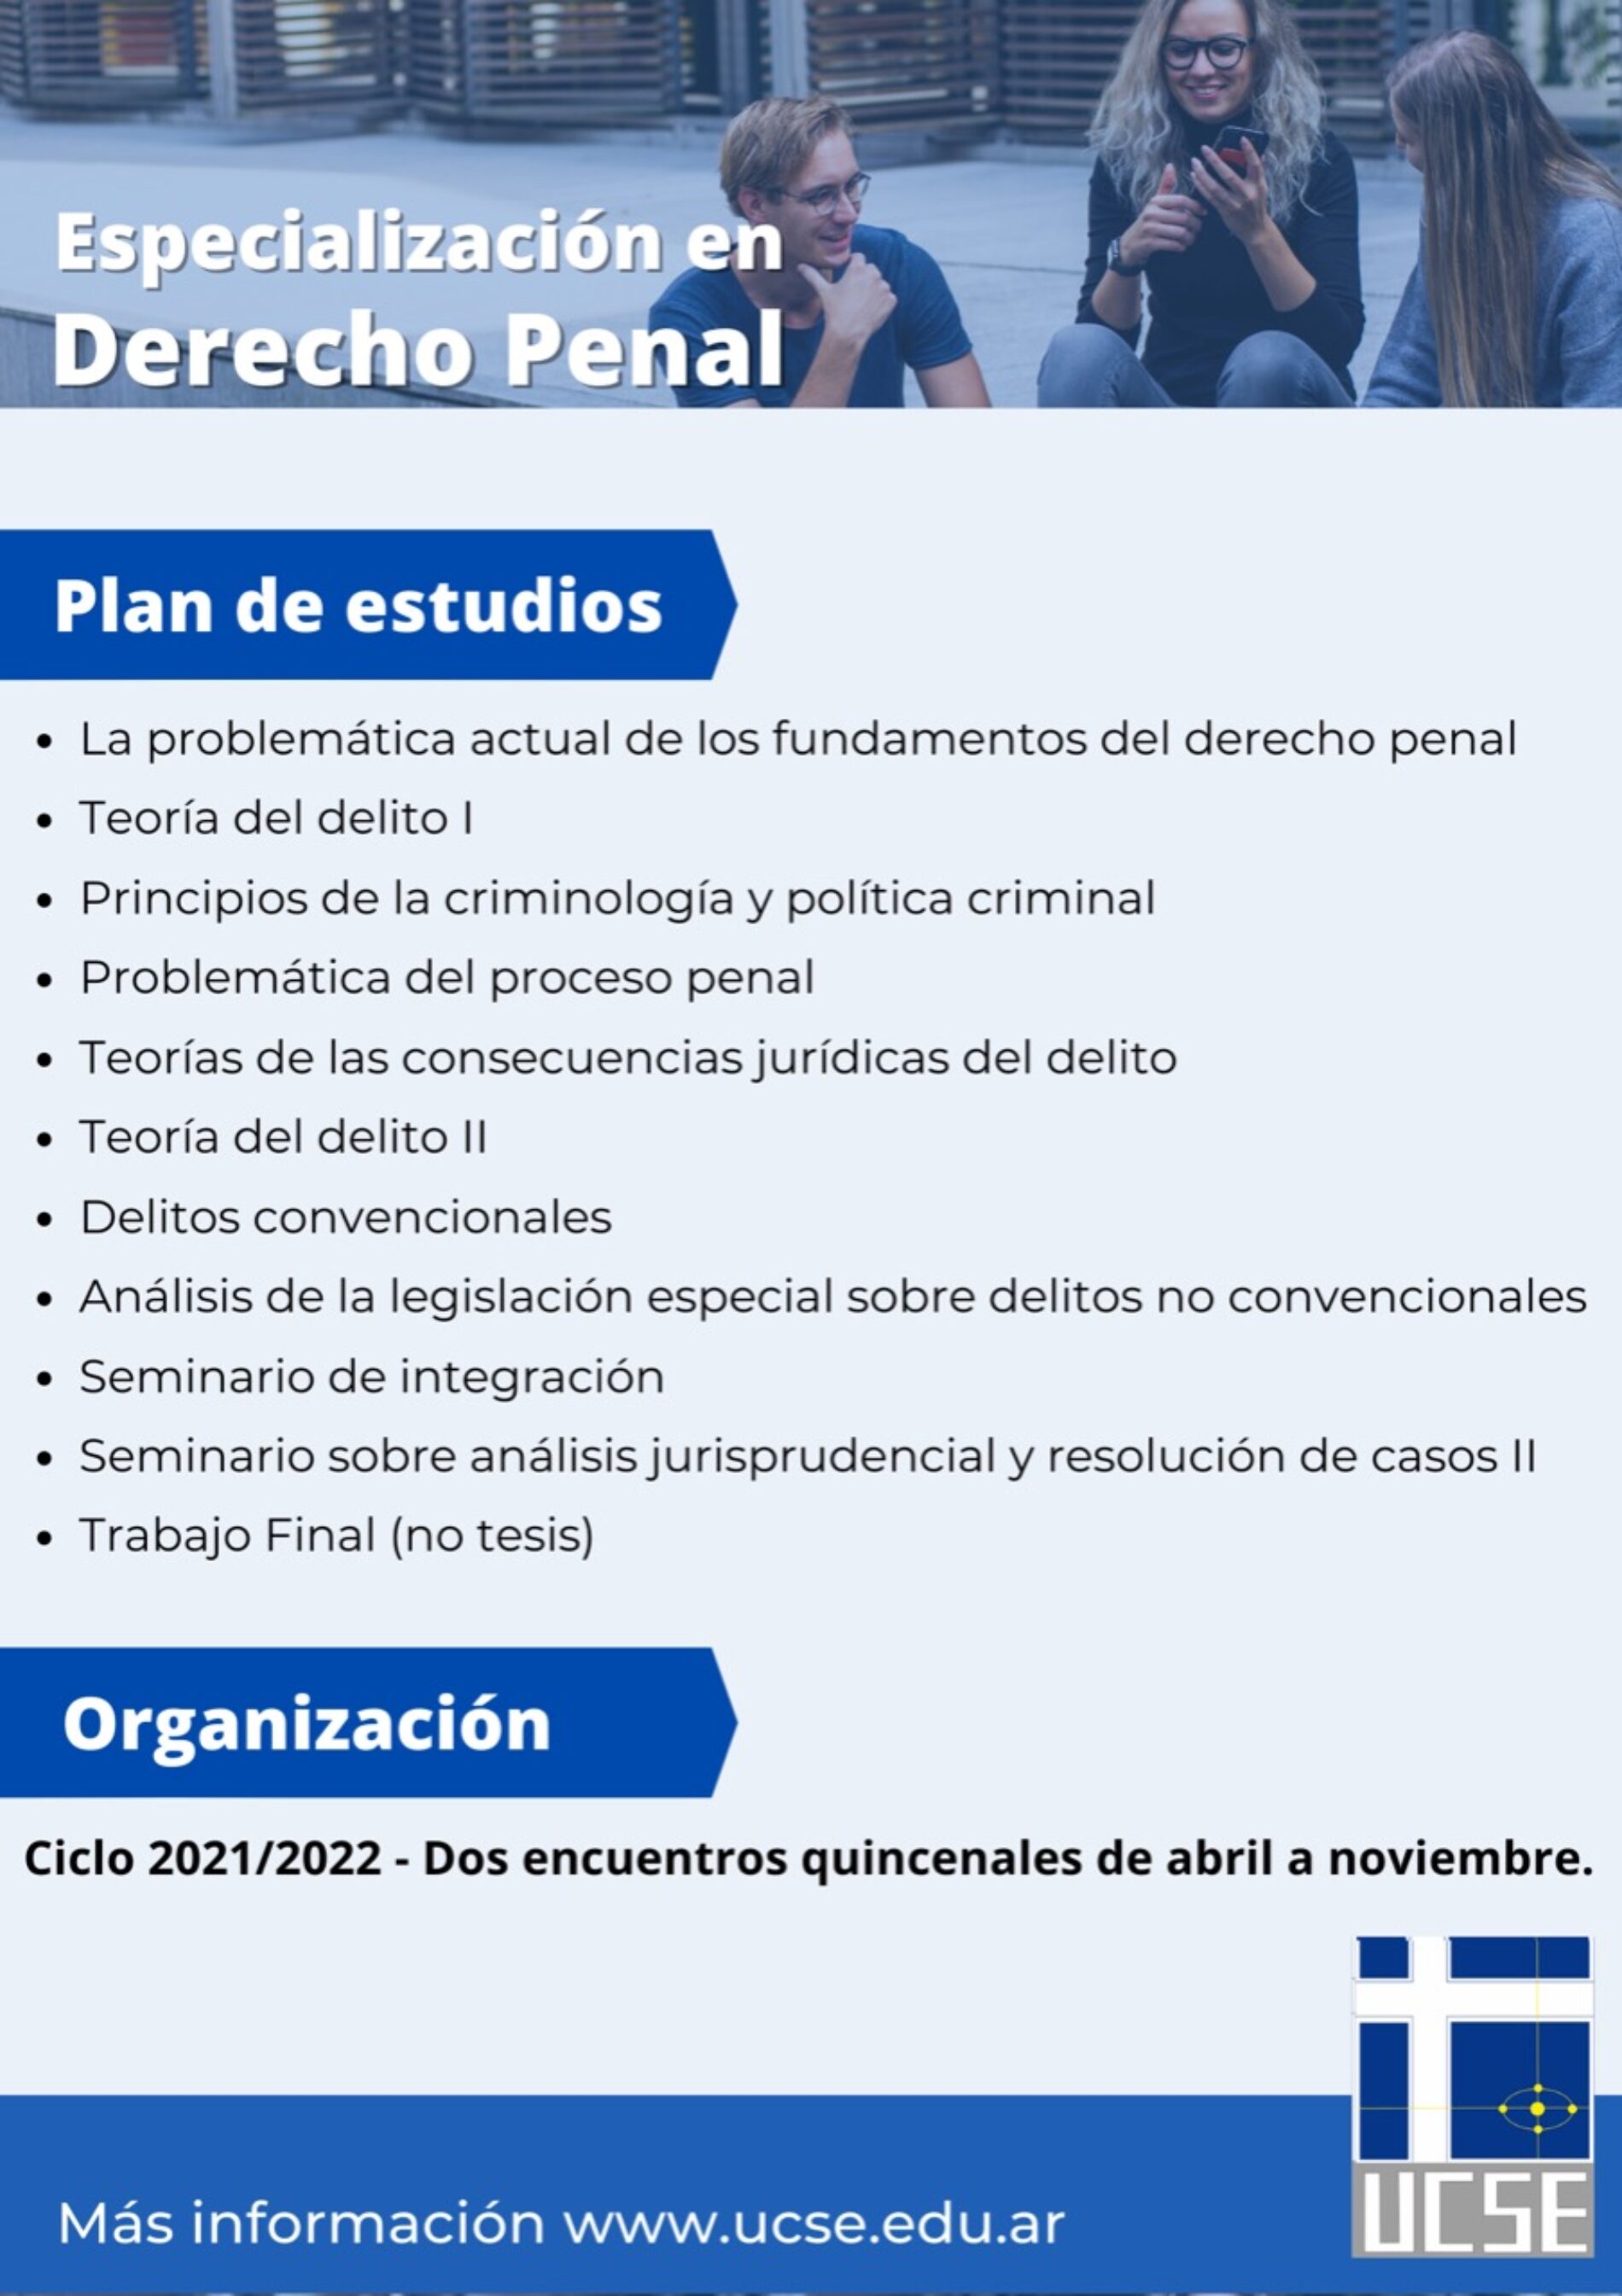 Especialización en Derecho Penal. U.C.S.E -sede Buenos Aires-.